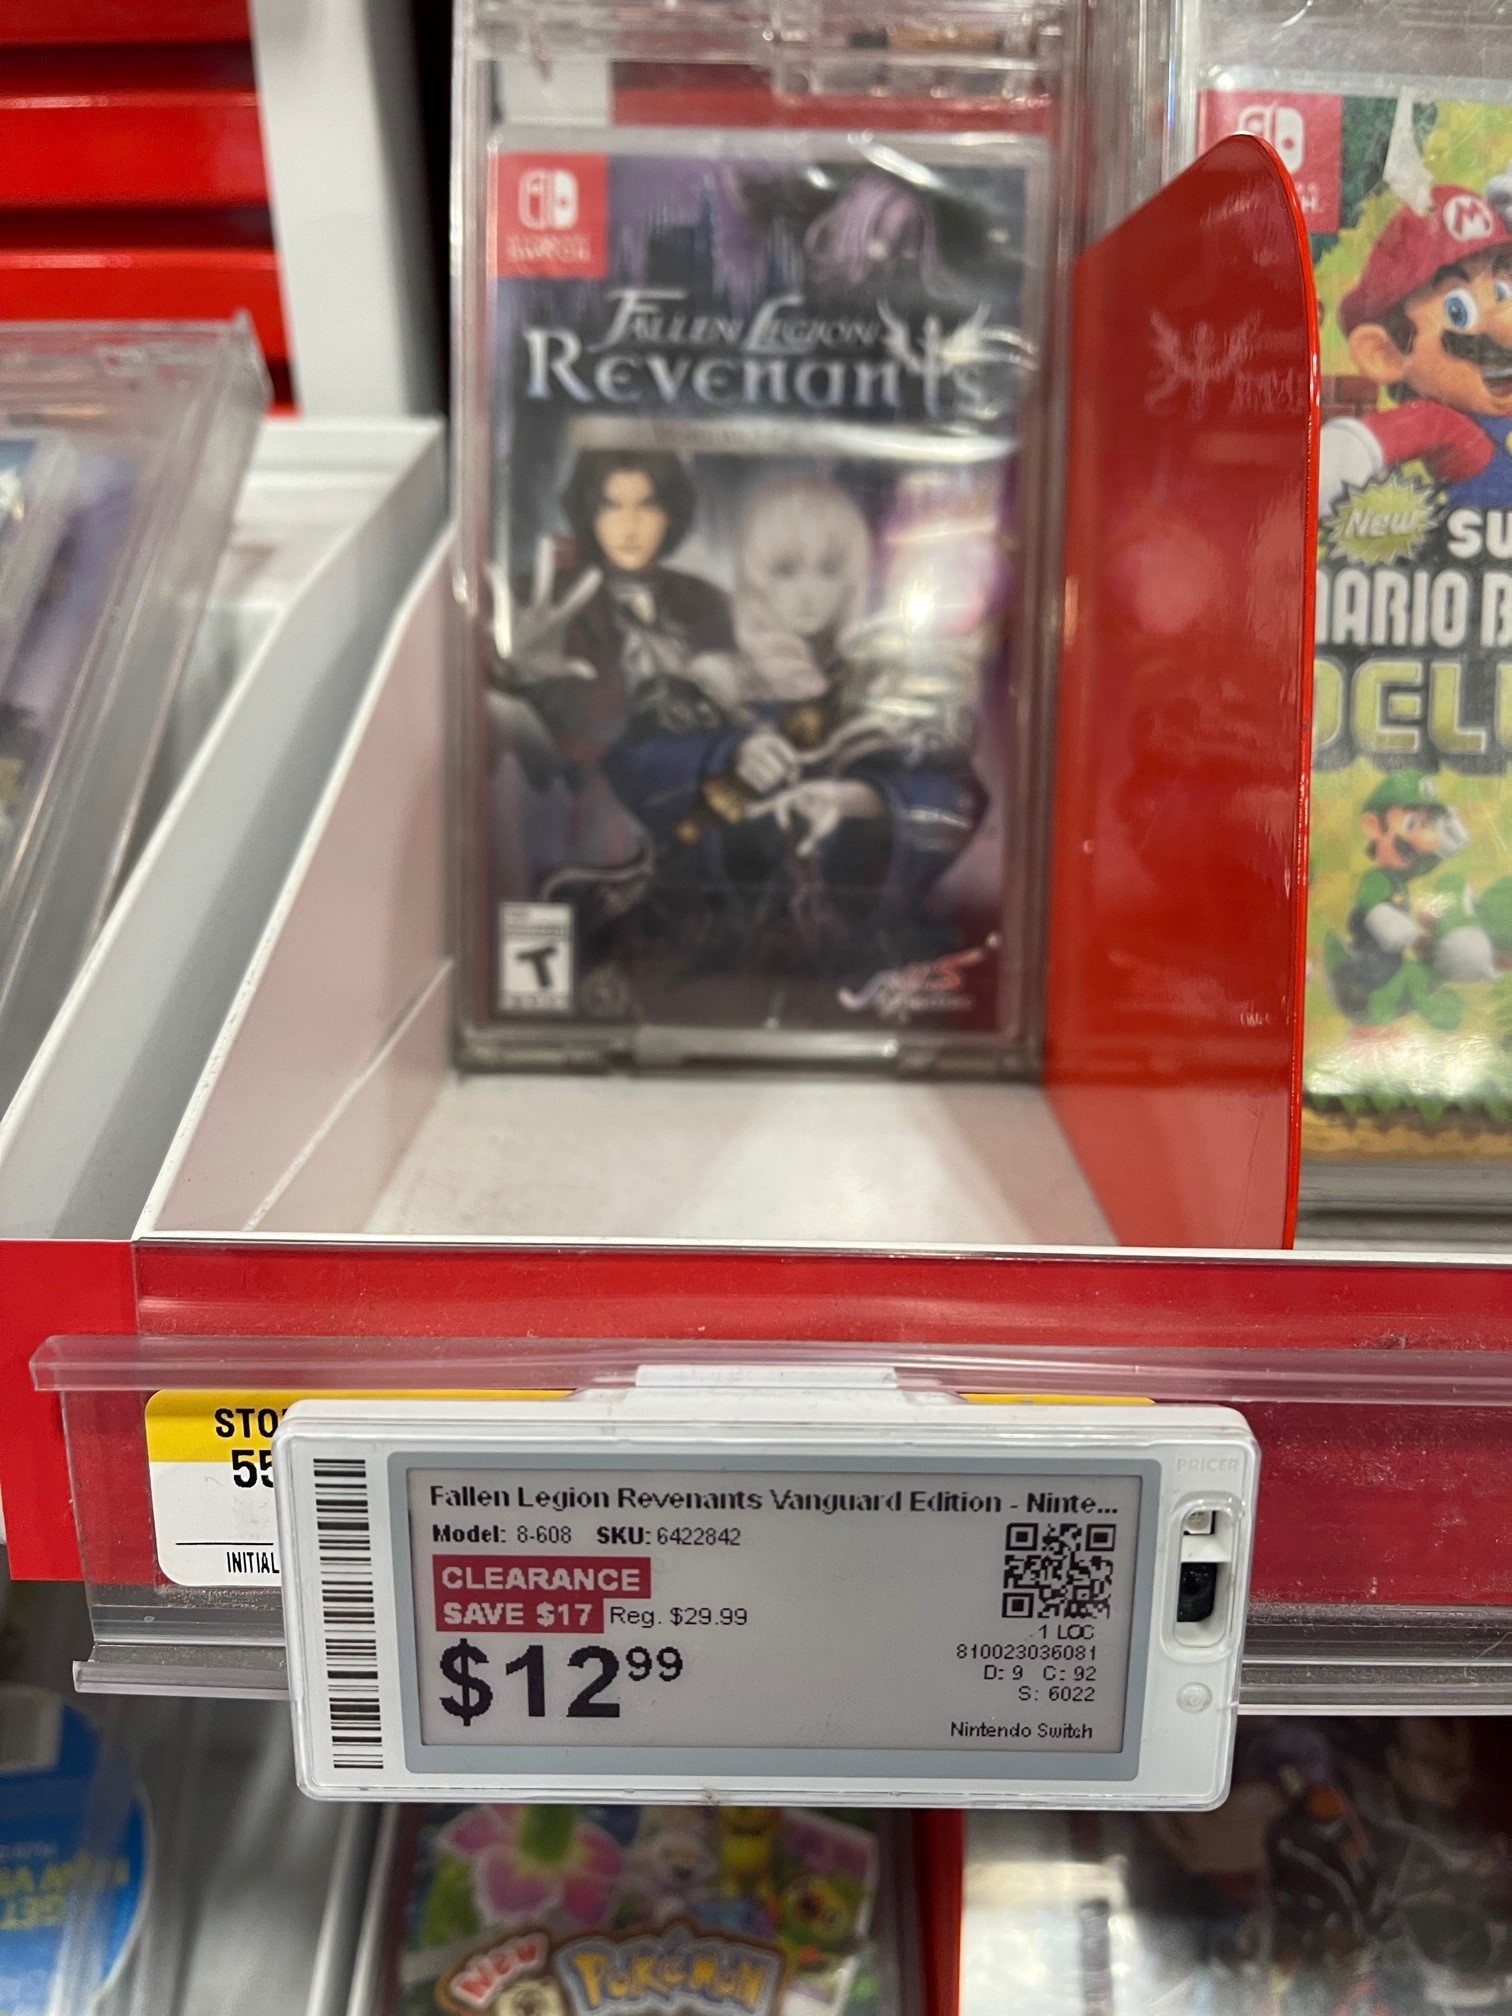 Nintendo Switch - Fallen Legion Revenants Vanguard Edition - $12.99 - YMMV